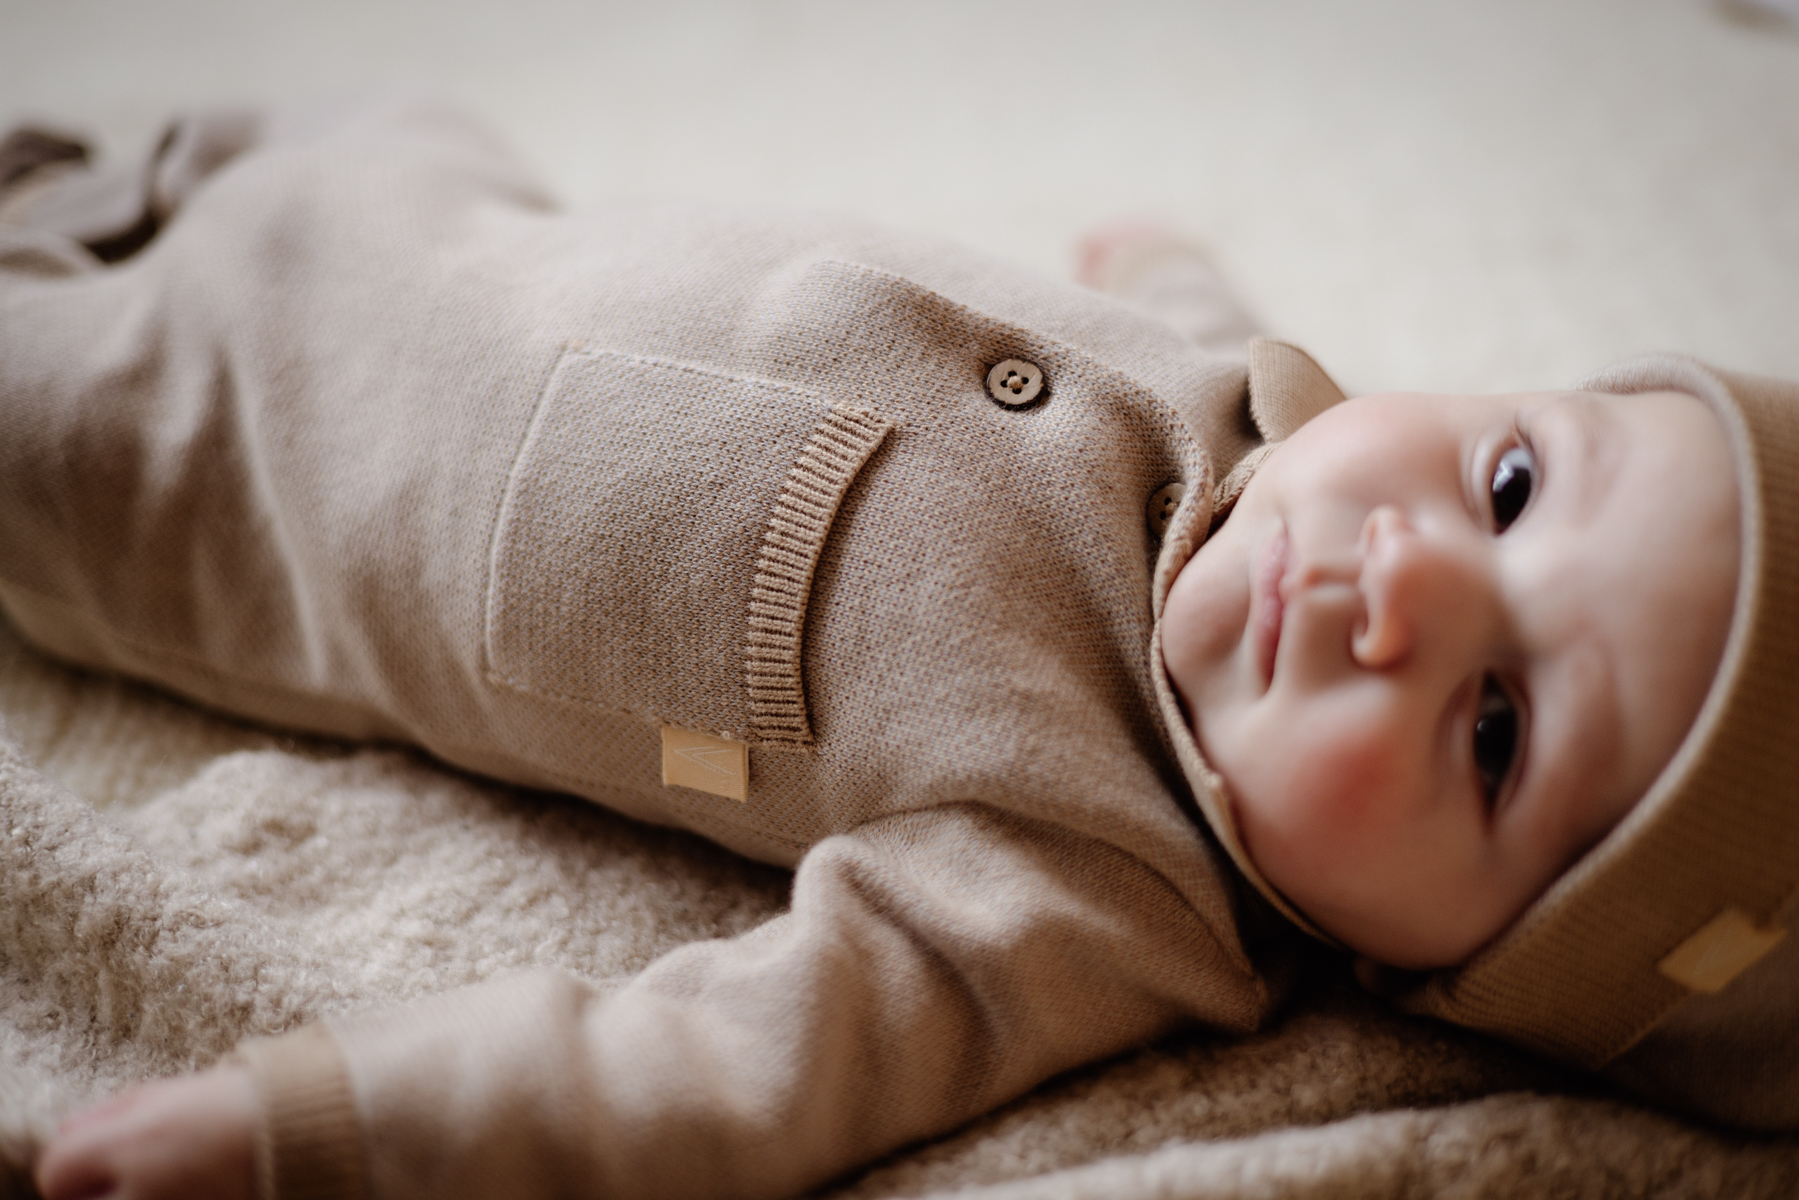 Levv Baby Bodysuit Polostyle brown tan